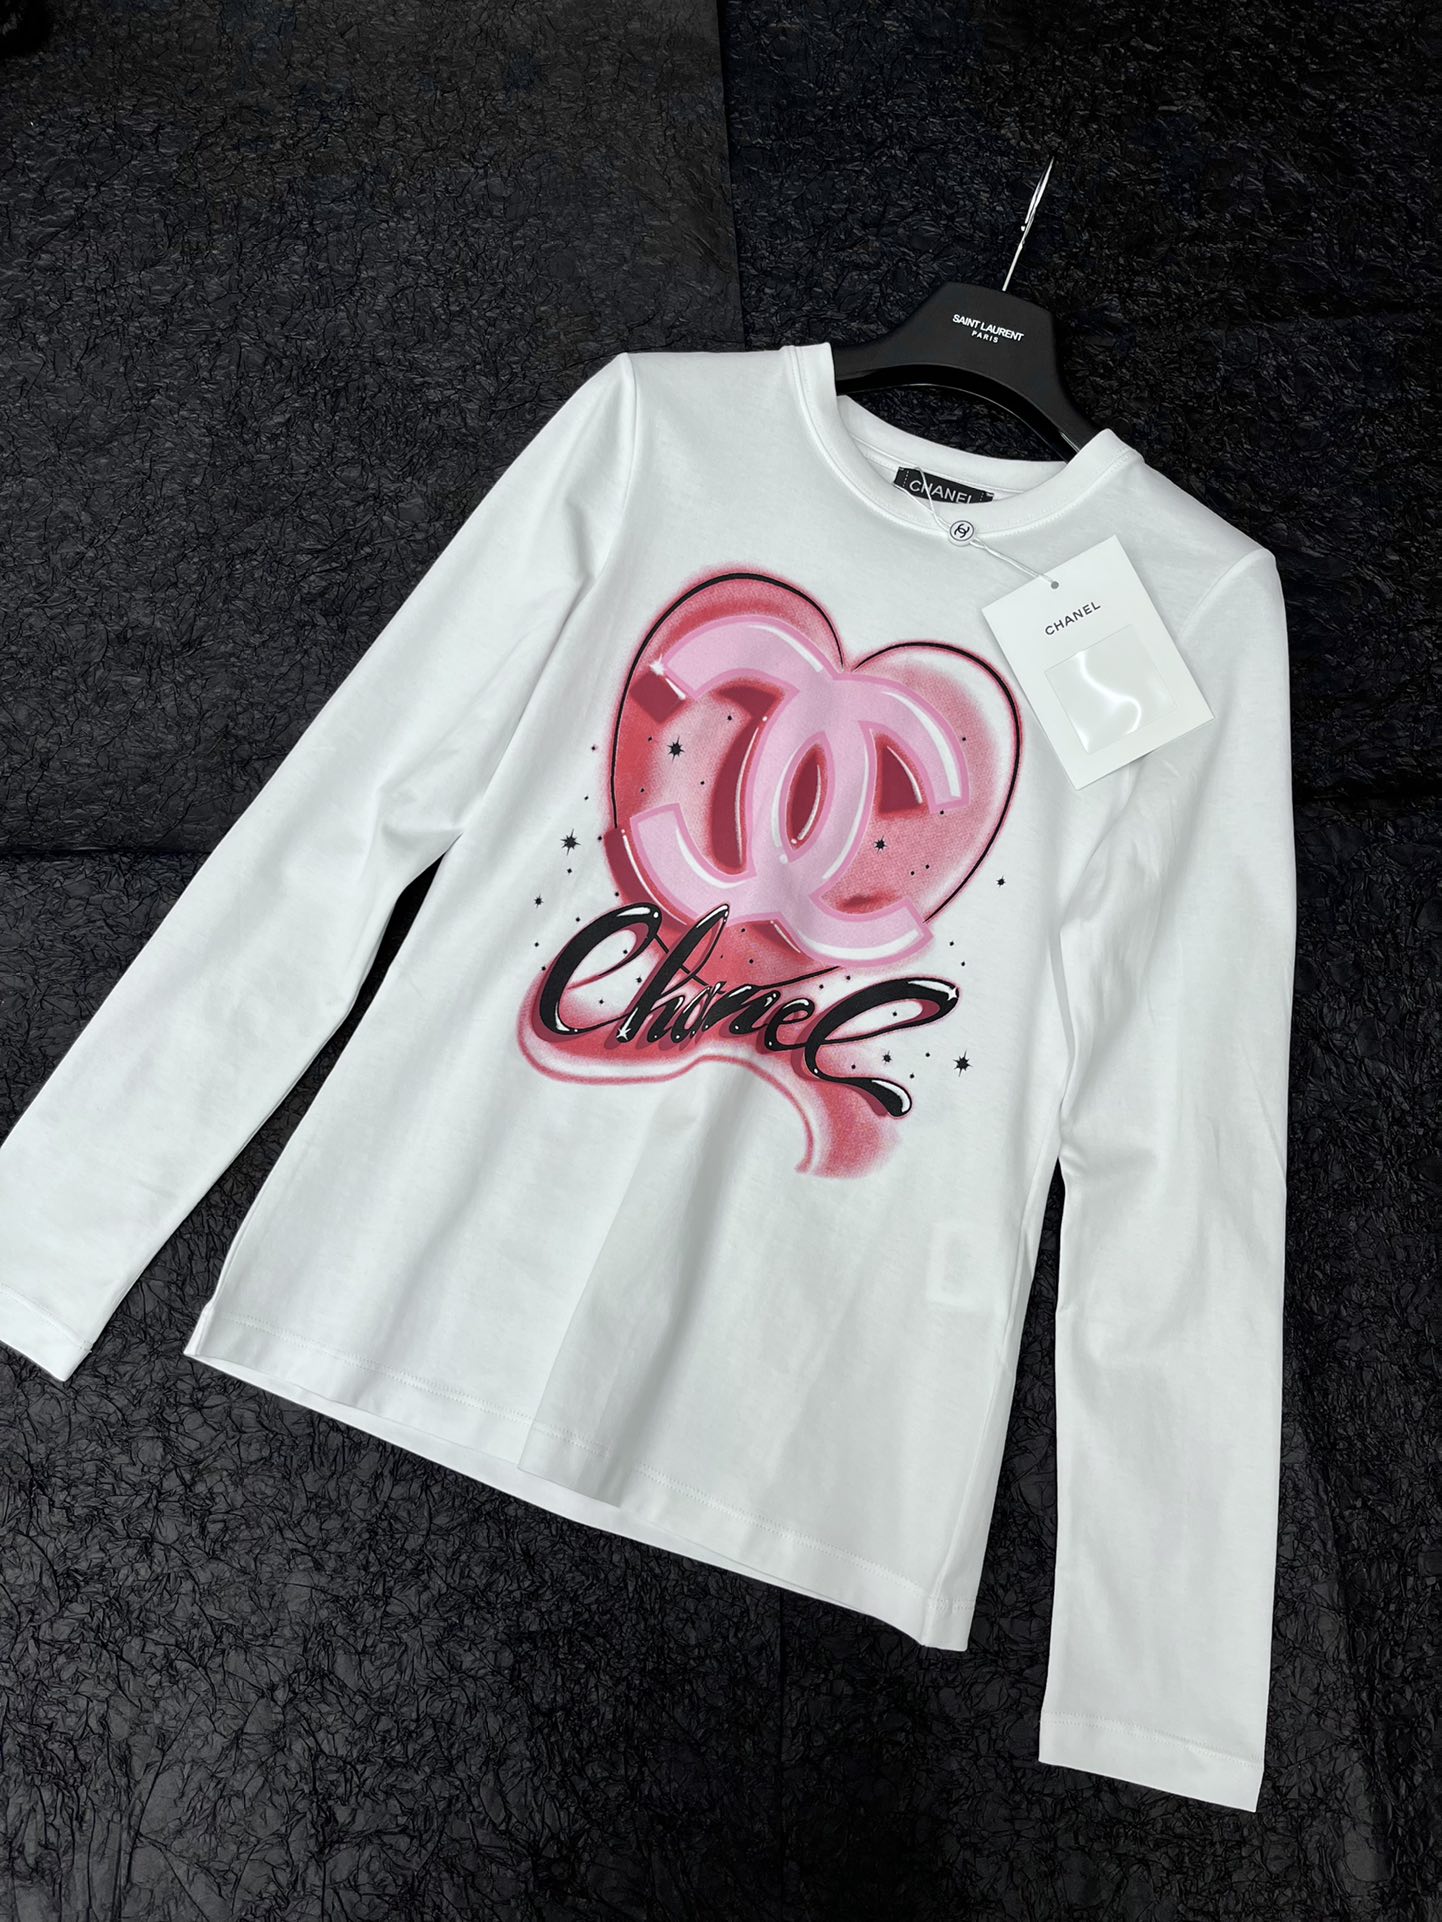 Chanel Clothing T-Shirt White Printing Long Sleeve